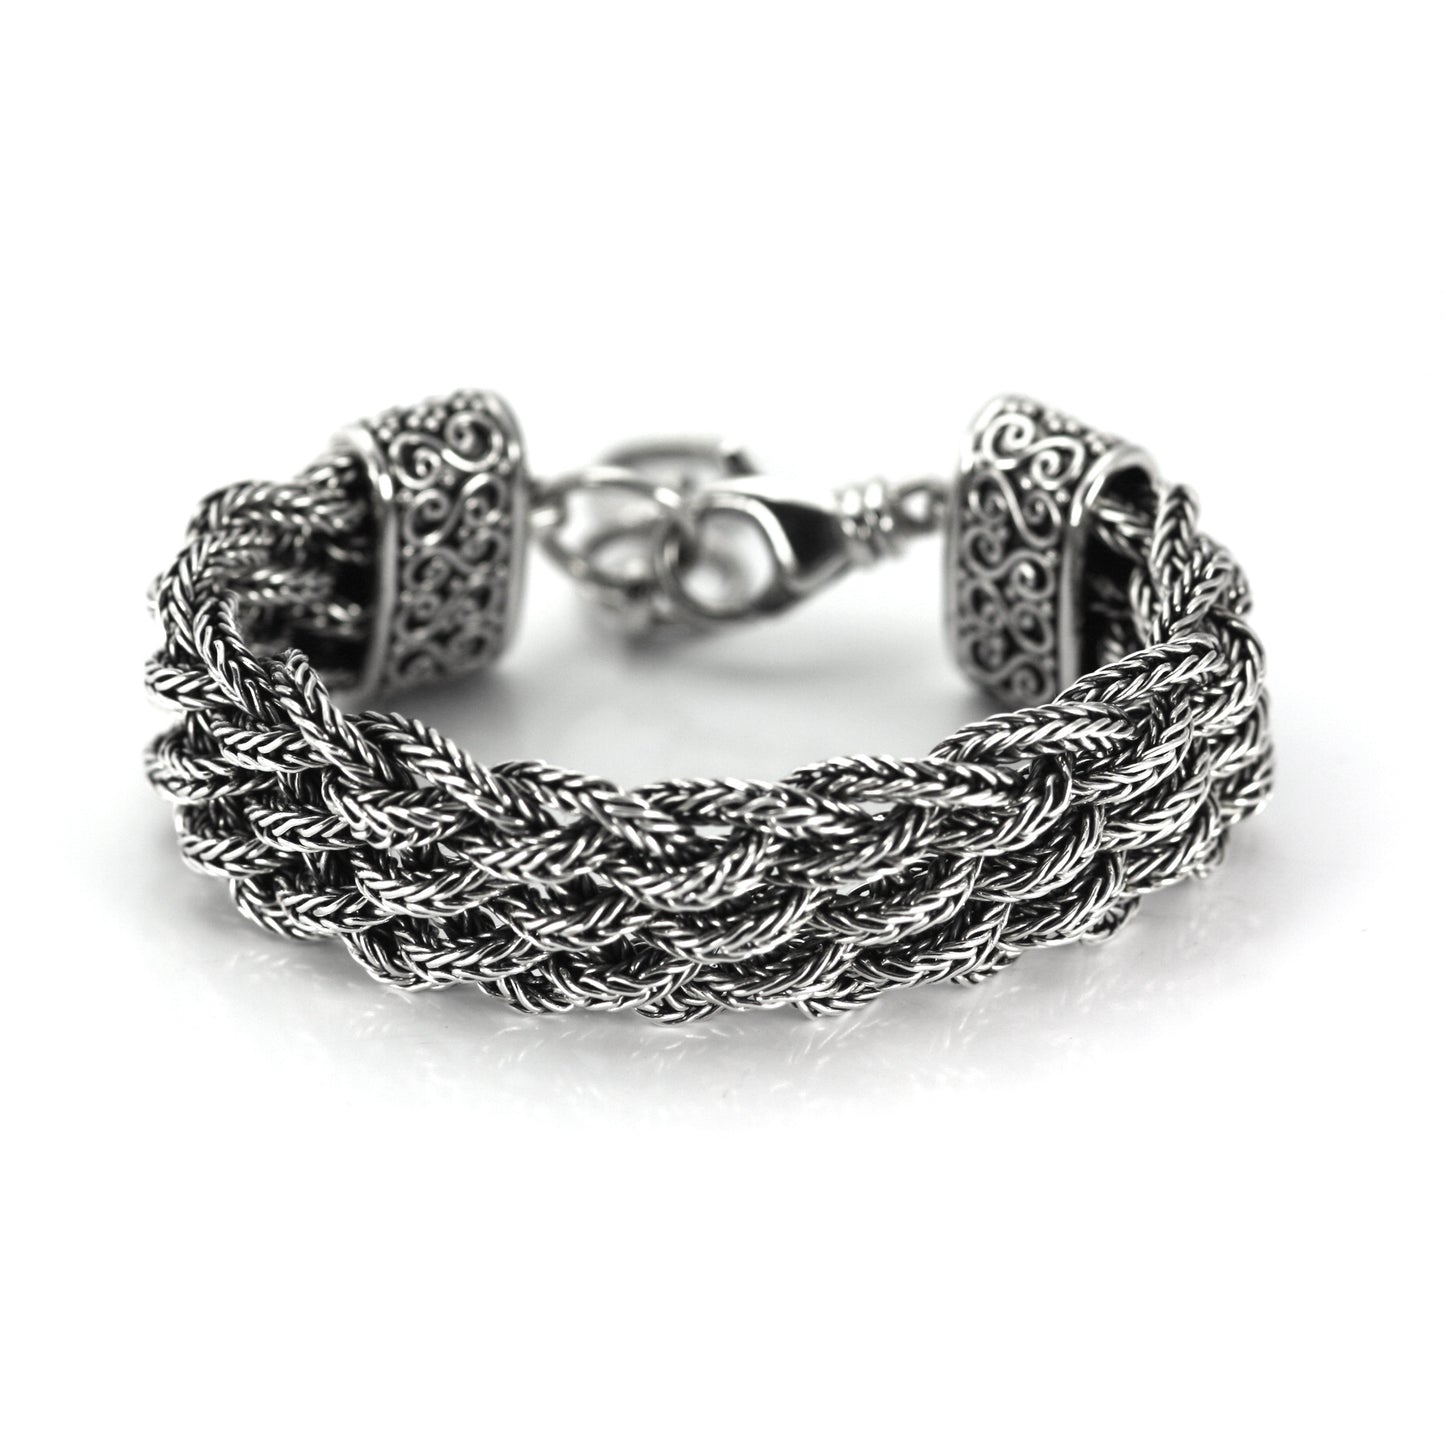 Wide braided silver wire bracelet.